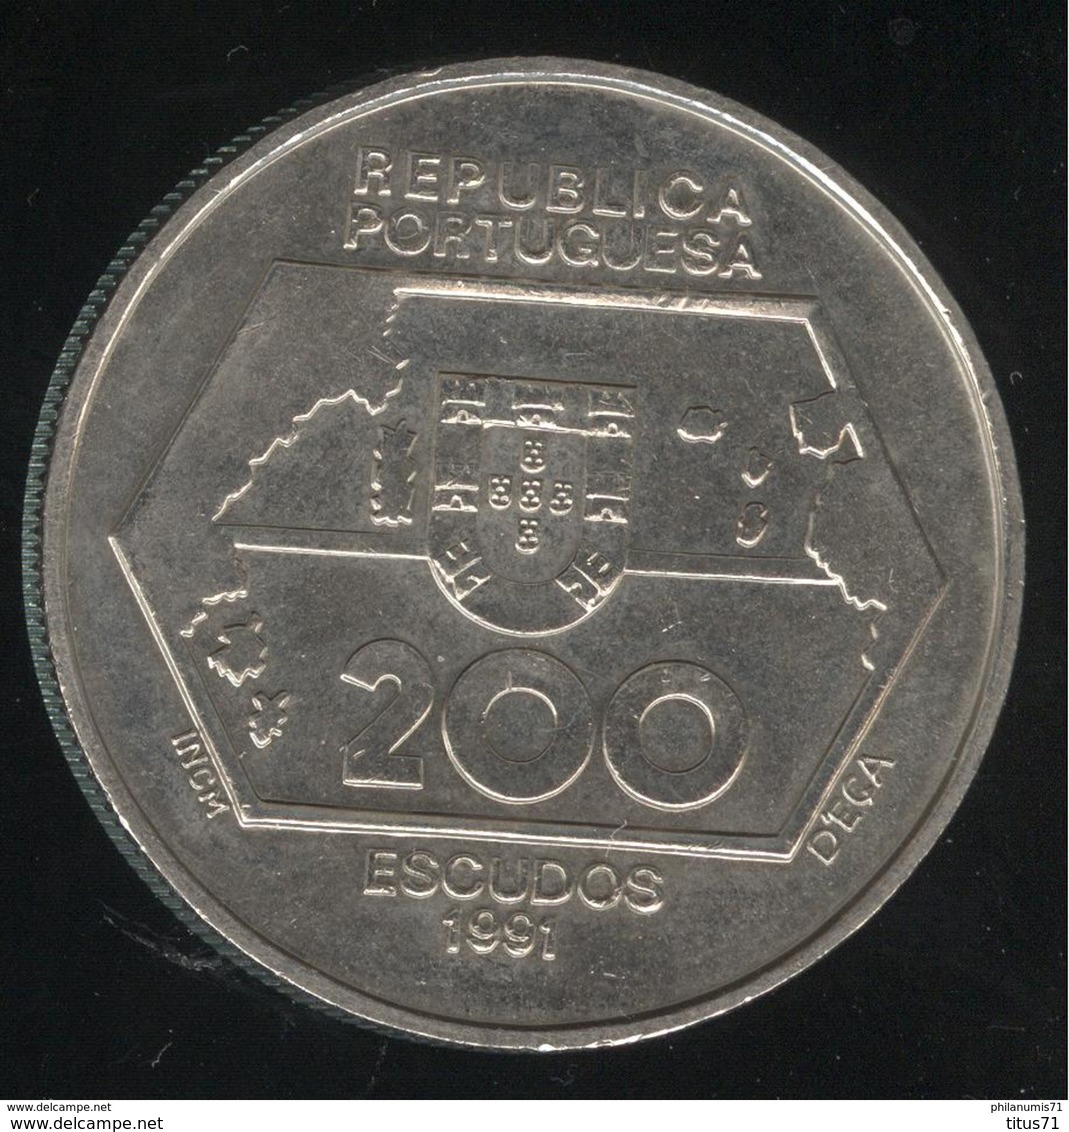 200 Escudos Portugal 1991 - Navigations Vers L'Ouest - Portugal